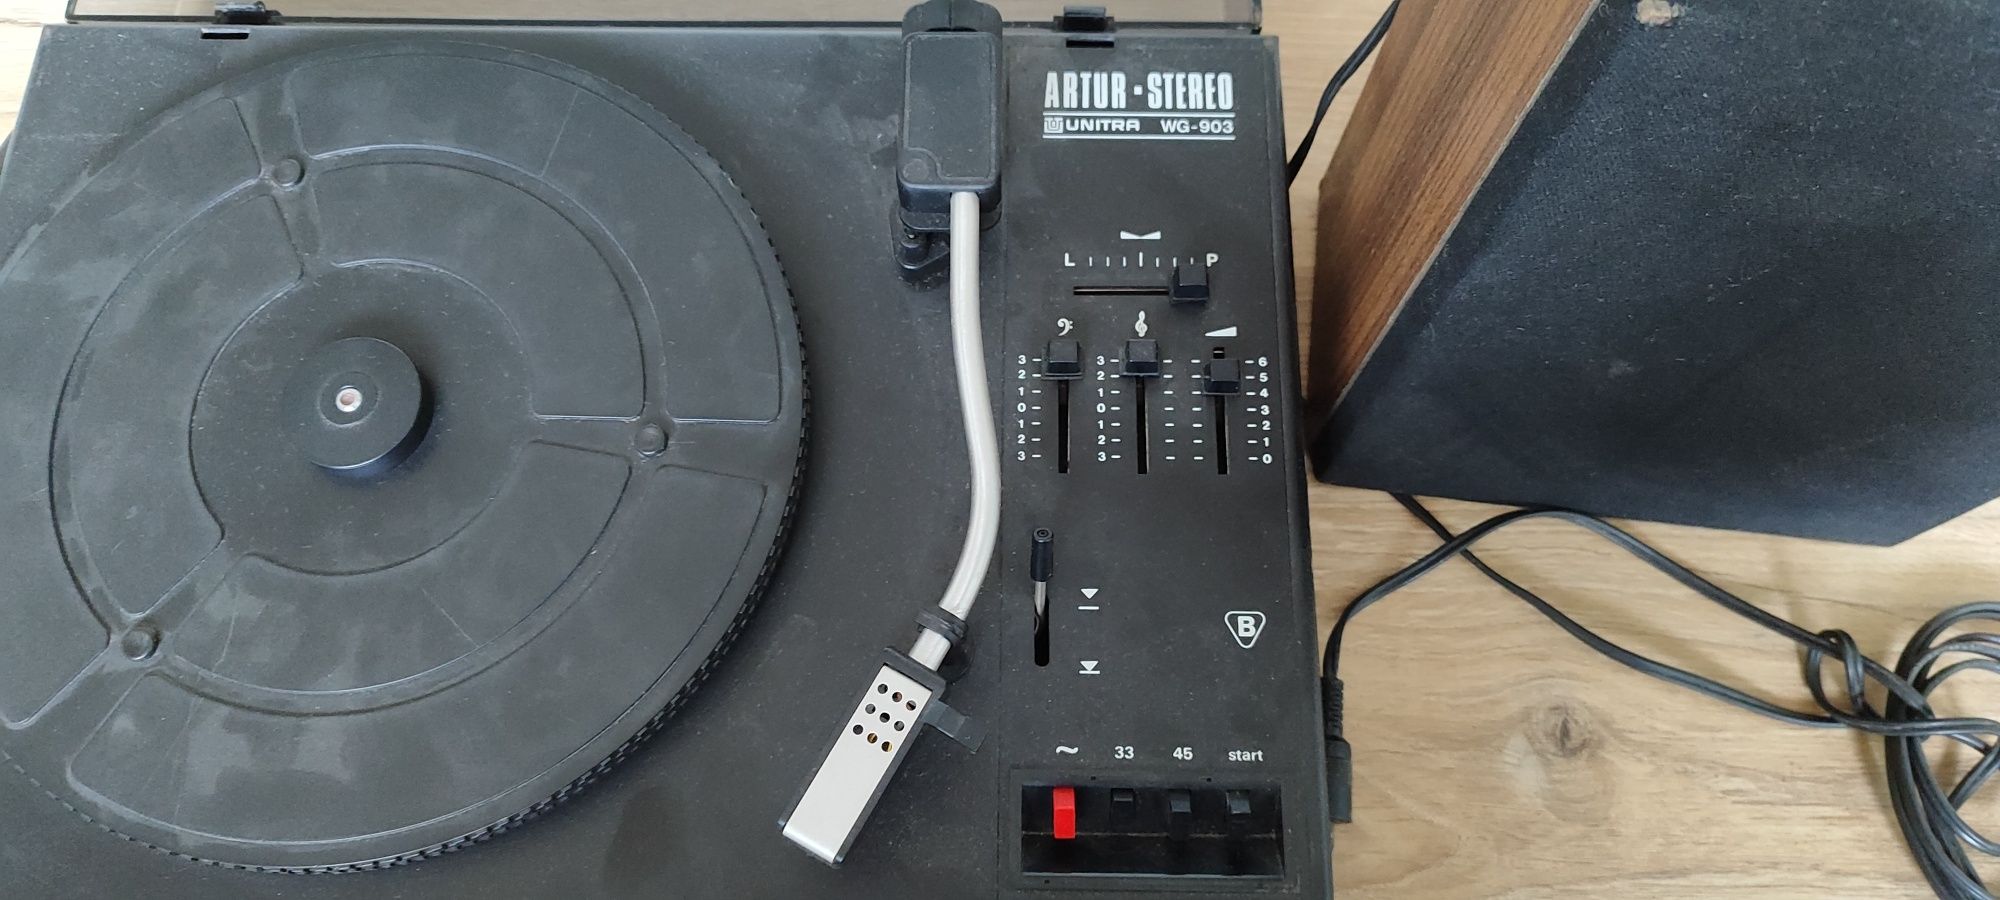 Gramofon Artur-Stereo Unitra WG-903